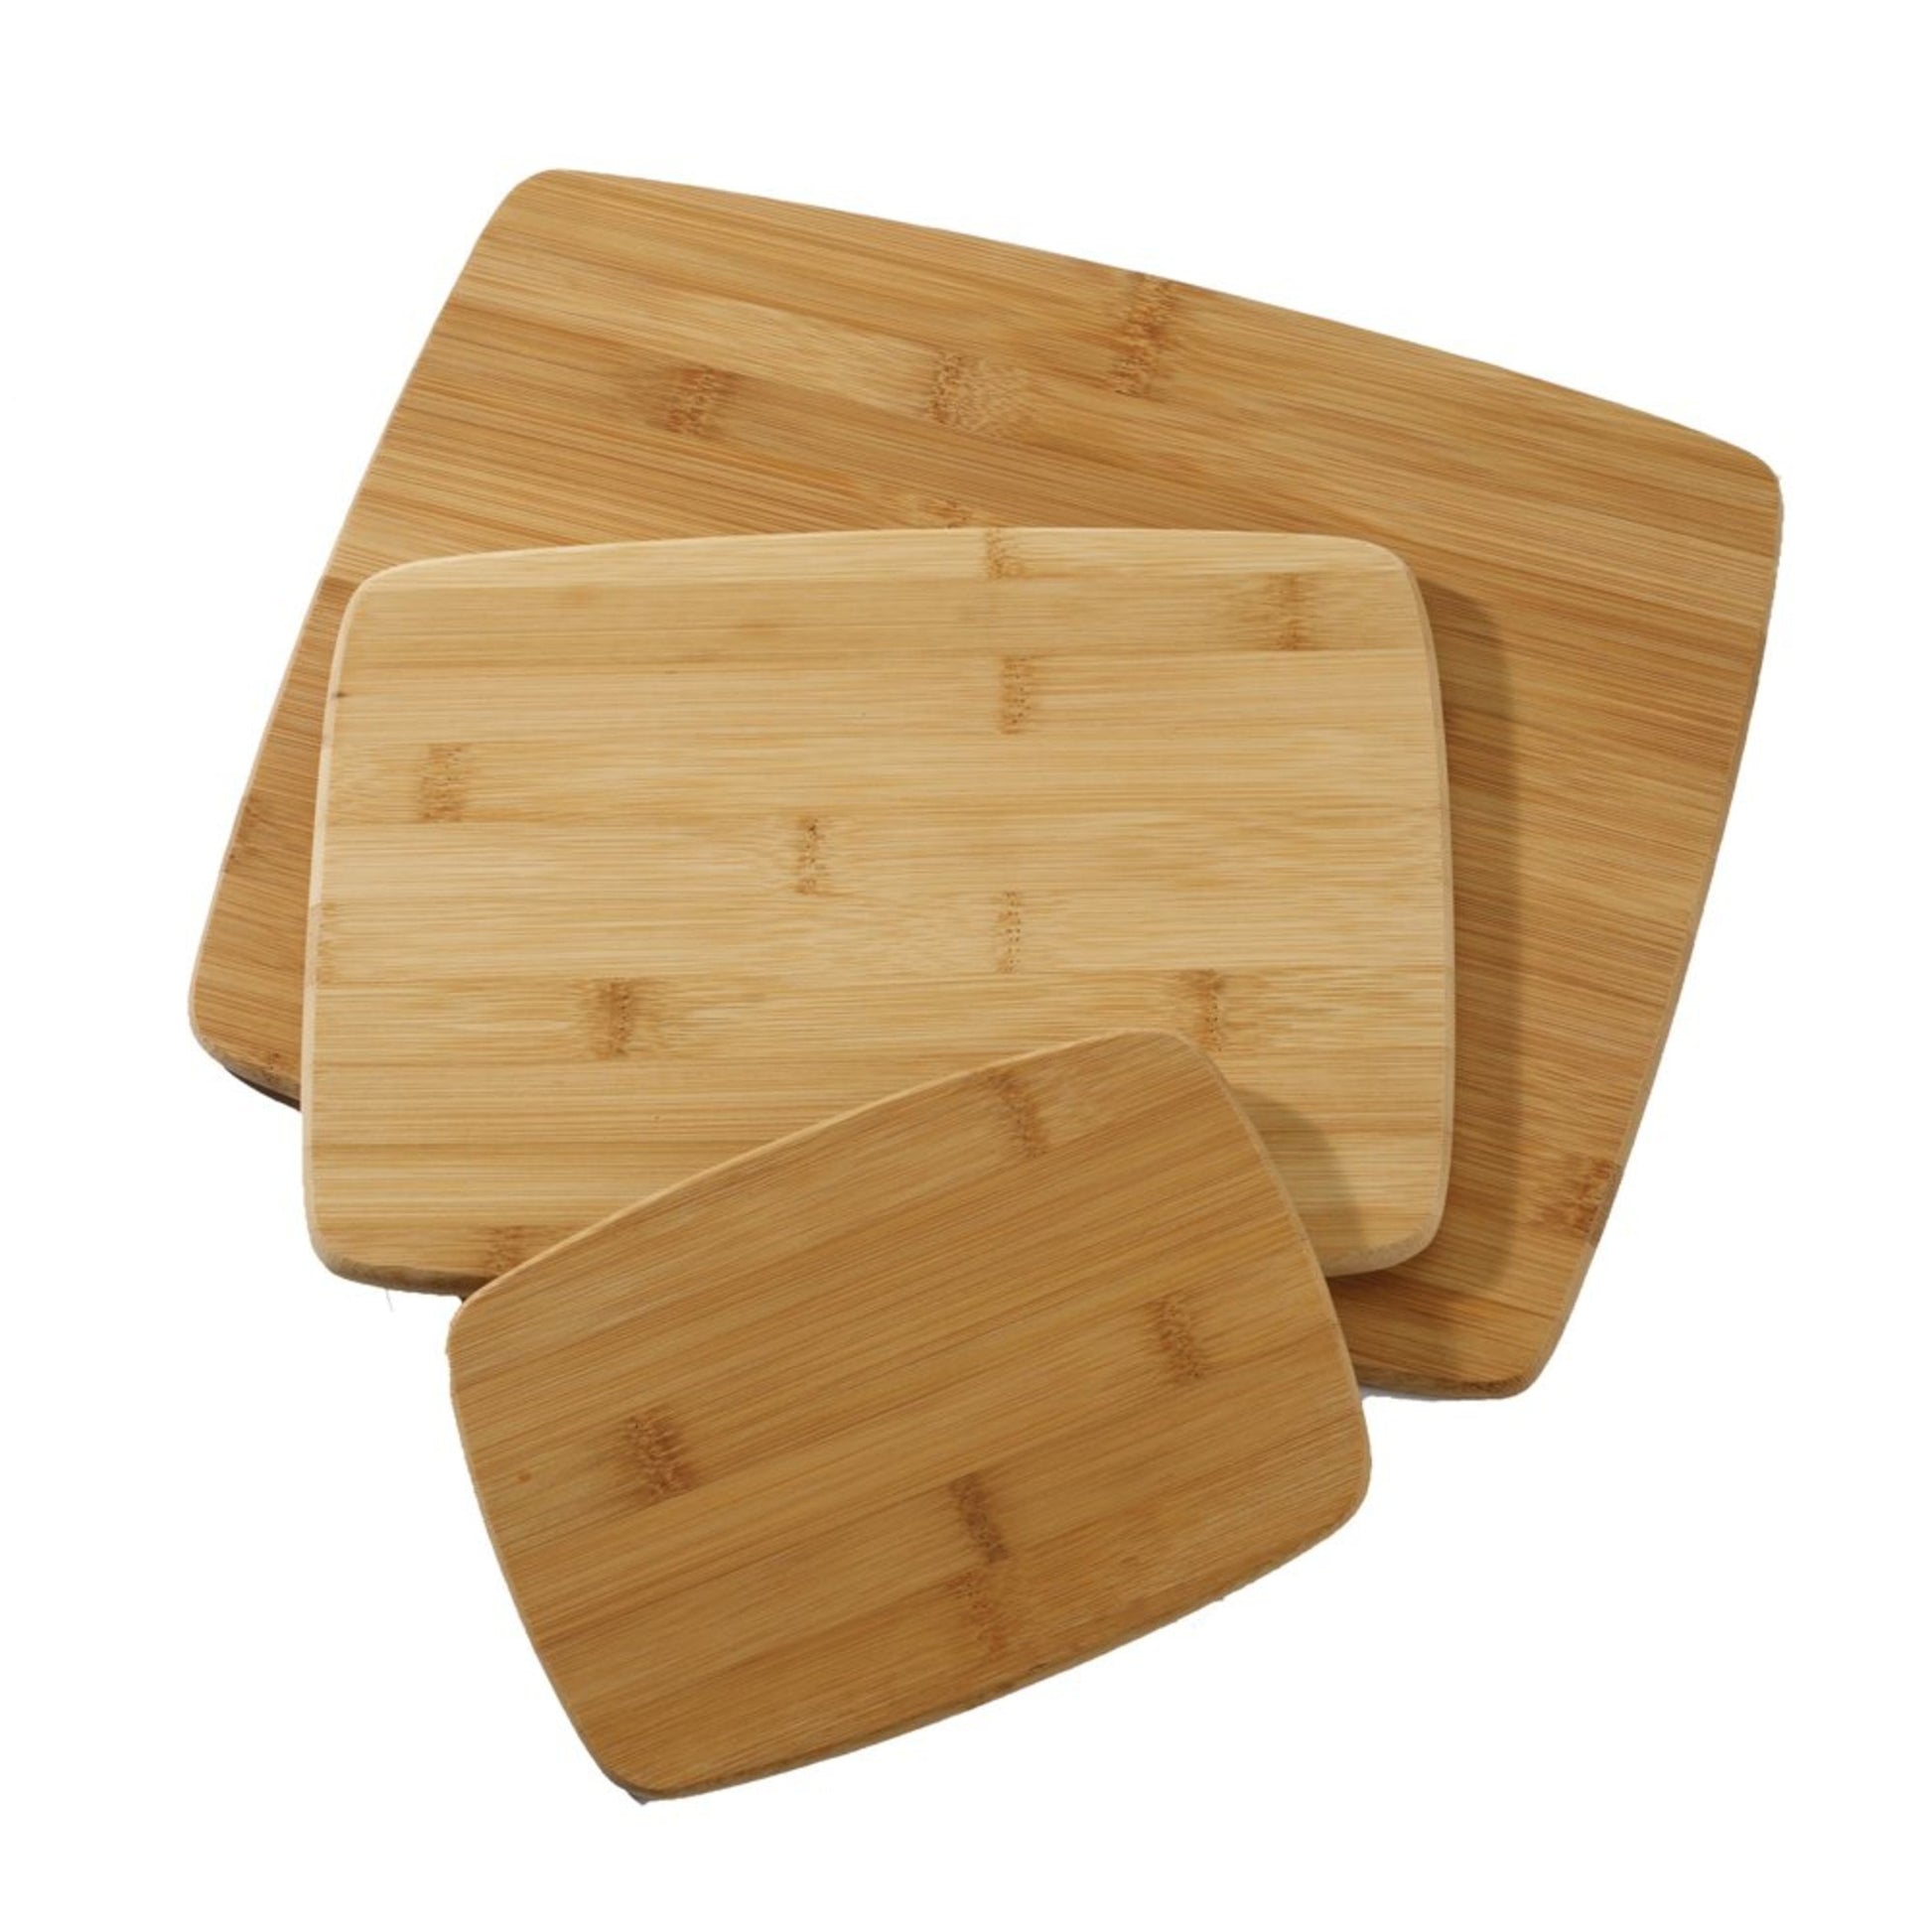 3-Piece Bamboo Wood Kitchen Cutting Board Set